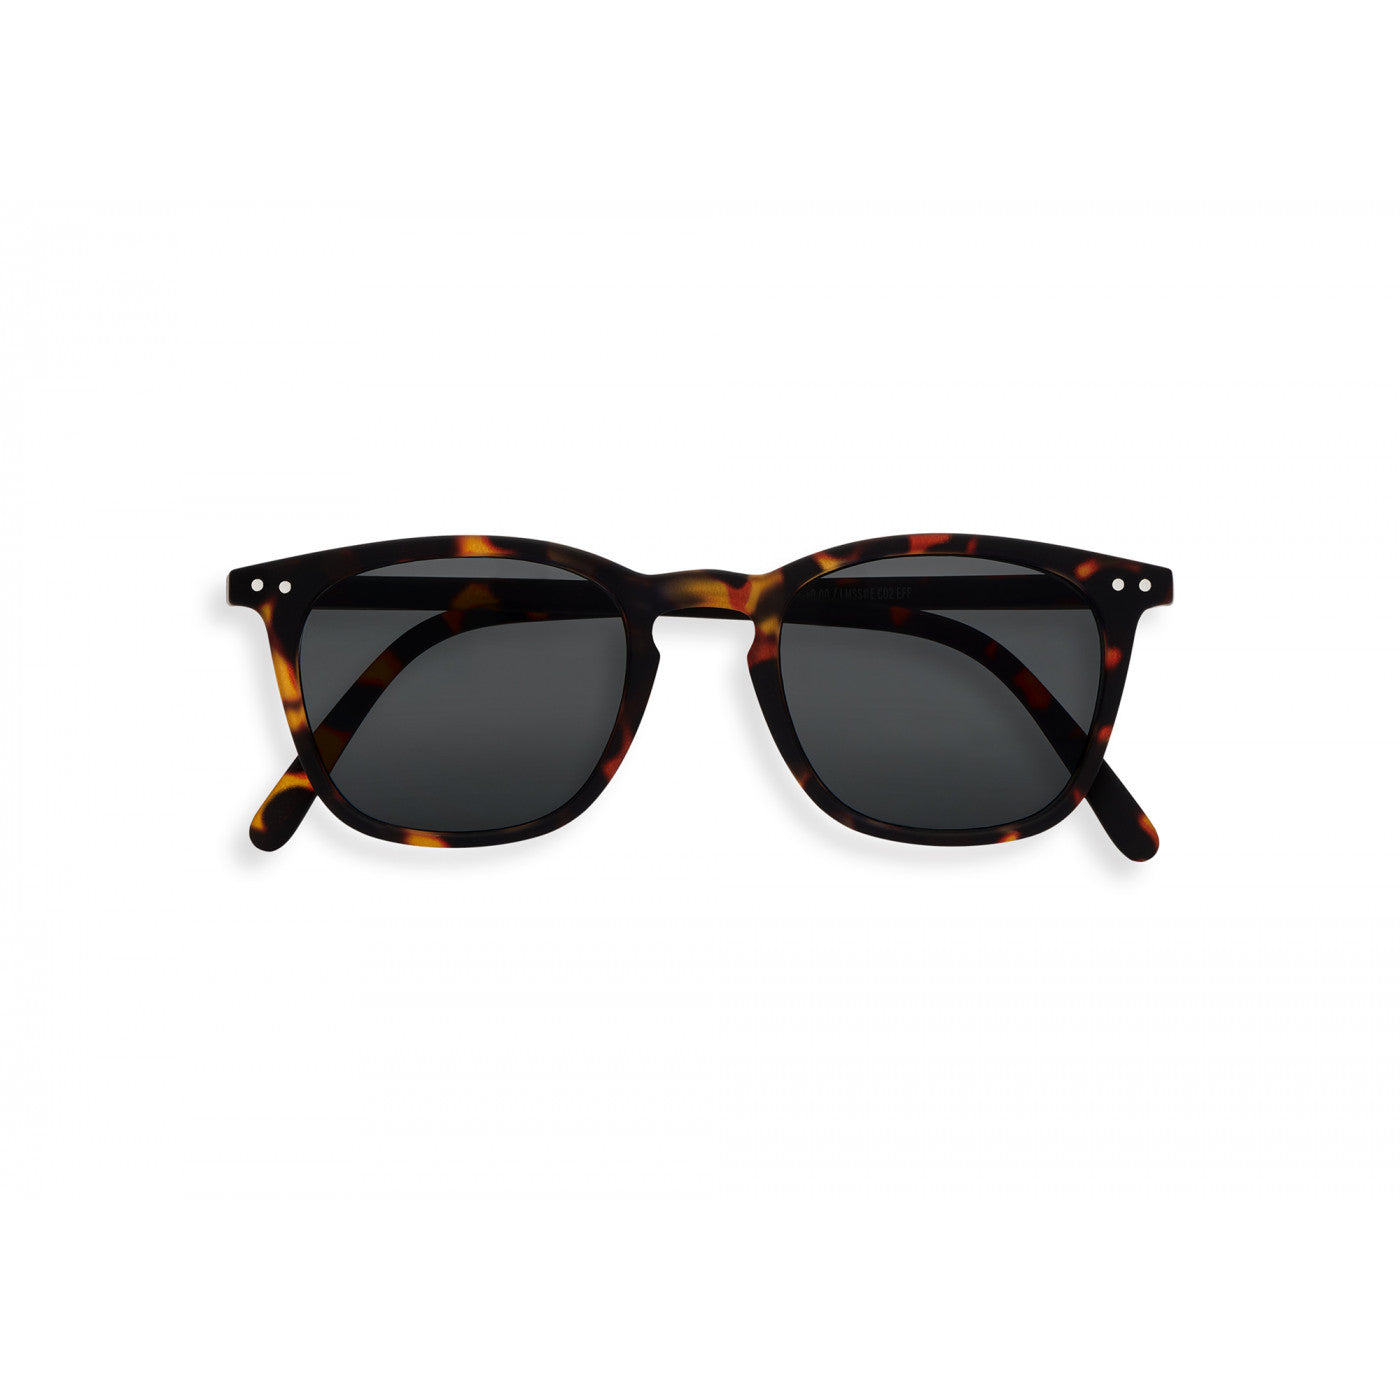 Unisex Sunglasses - Style E - Tortoise